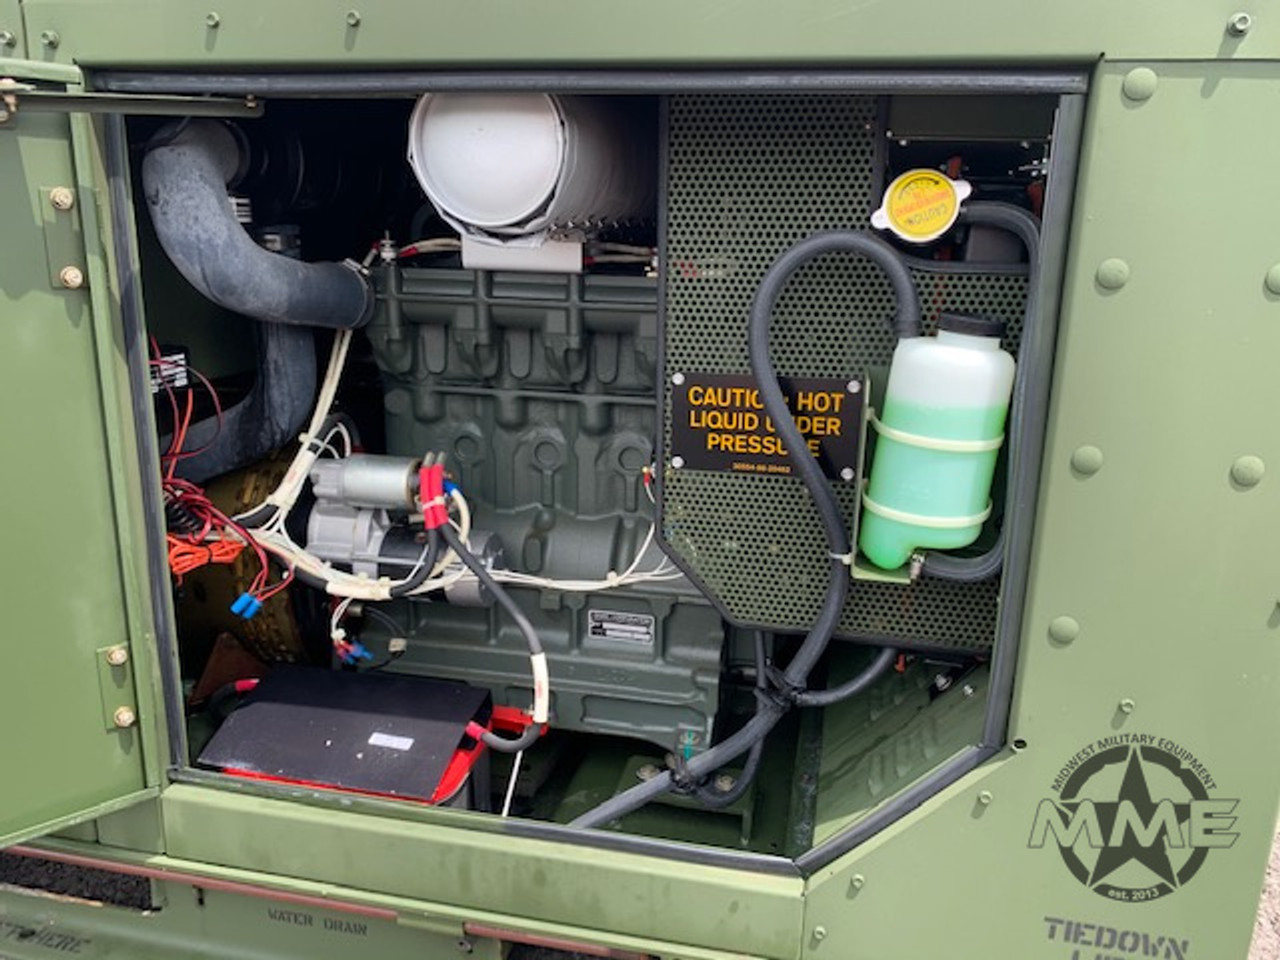 military 10kw generator